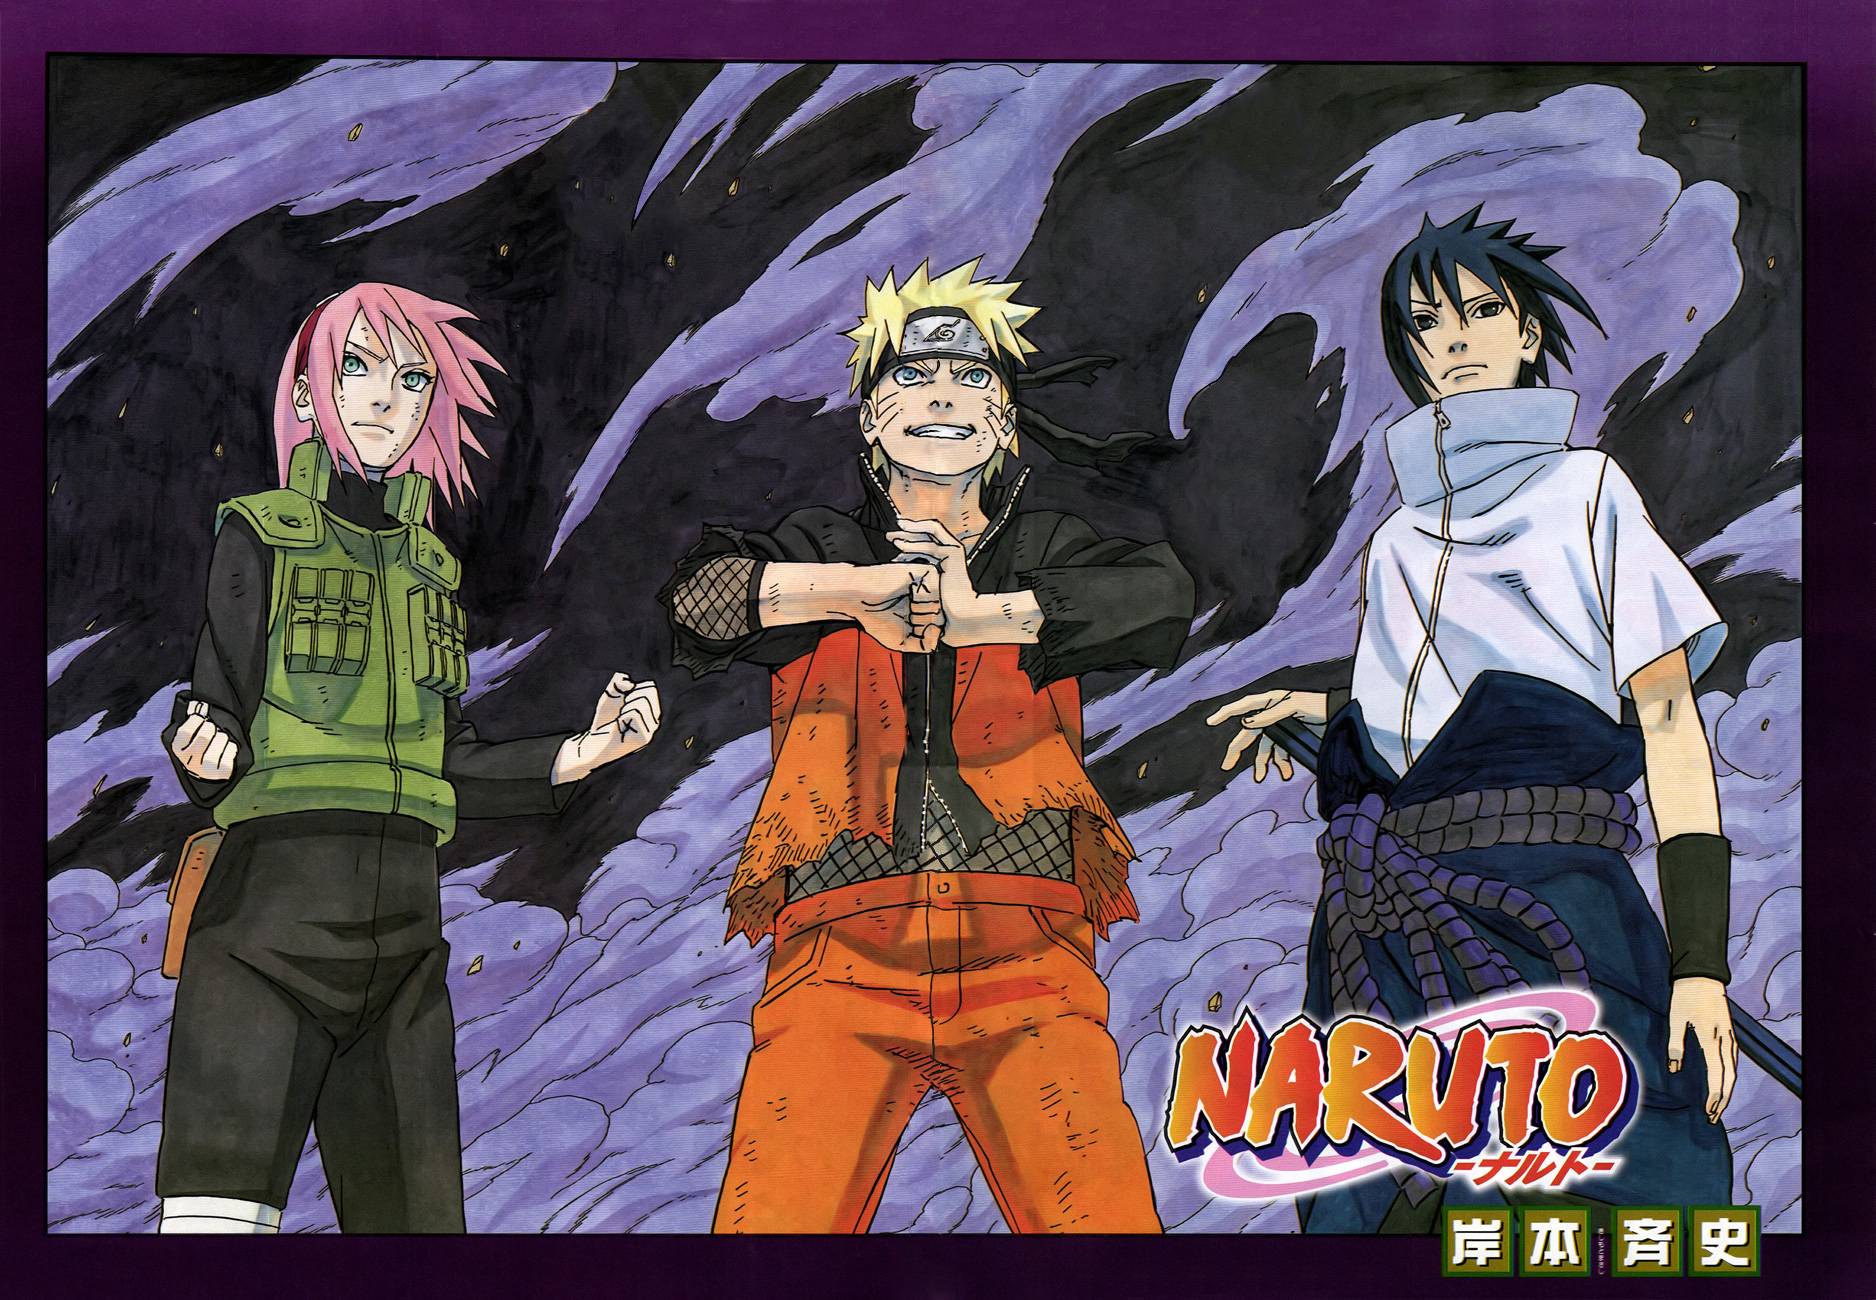 Naruto Shippuden 7 Reunites Again!